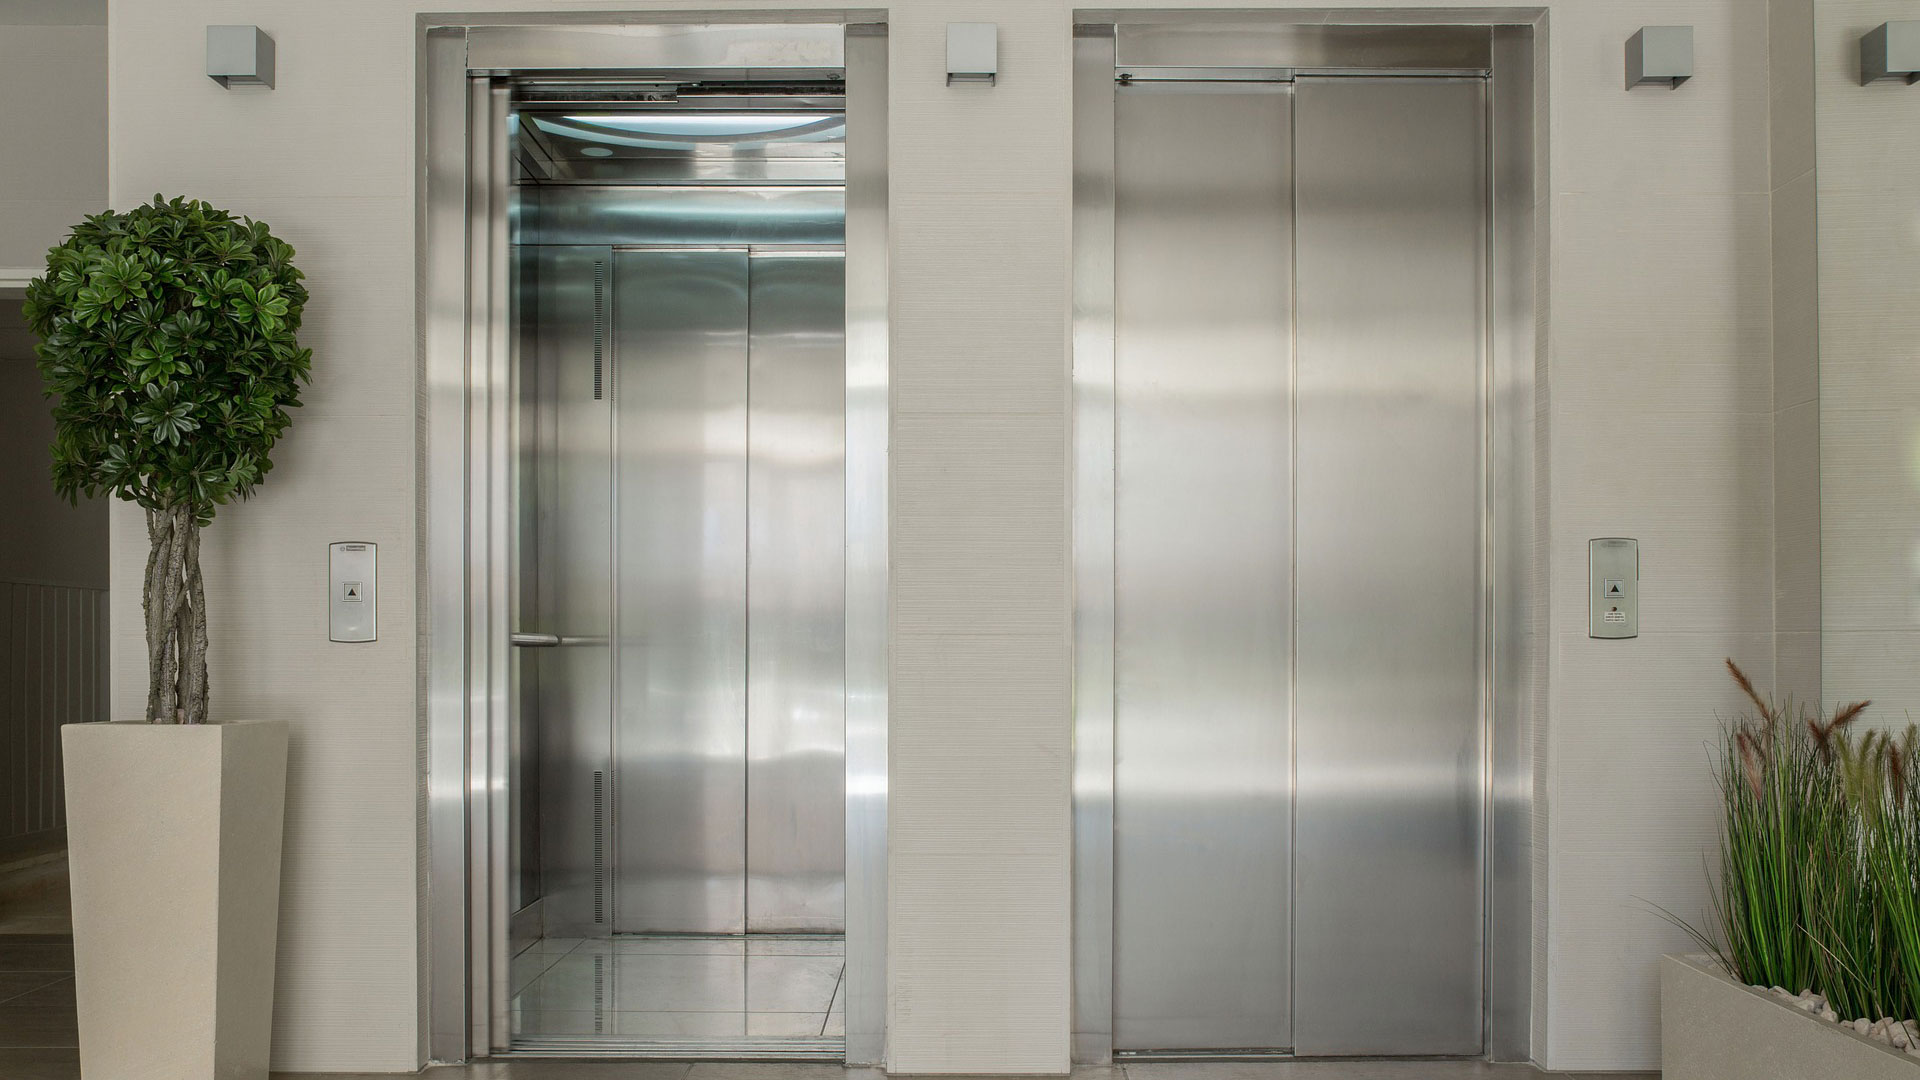 Class 1 Elevators - Lift Servicing, Repairs, Installation & Testing - Ayrshire